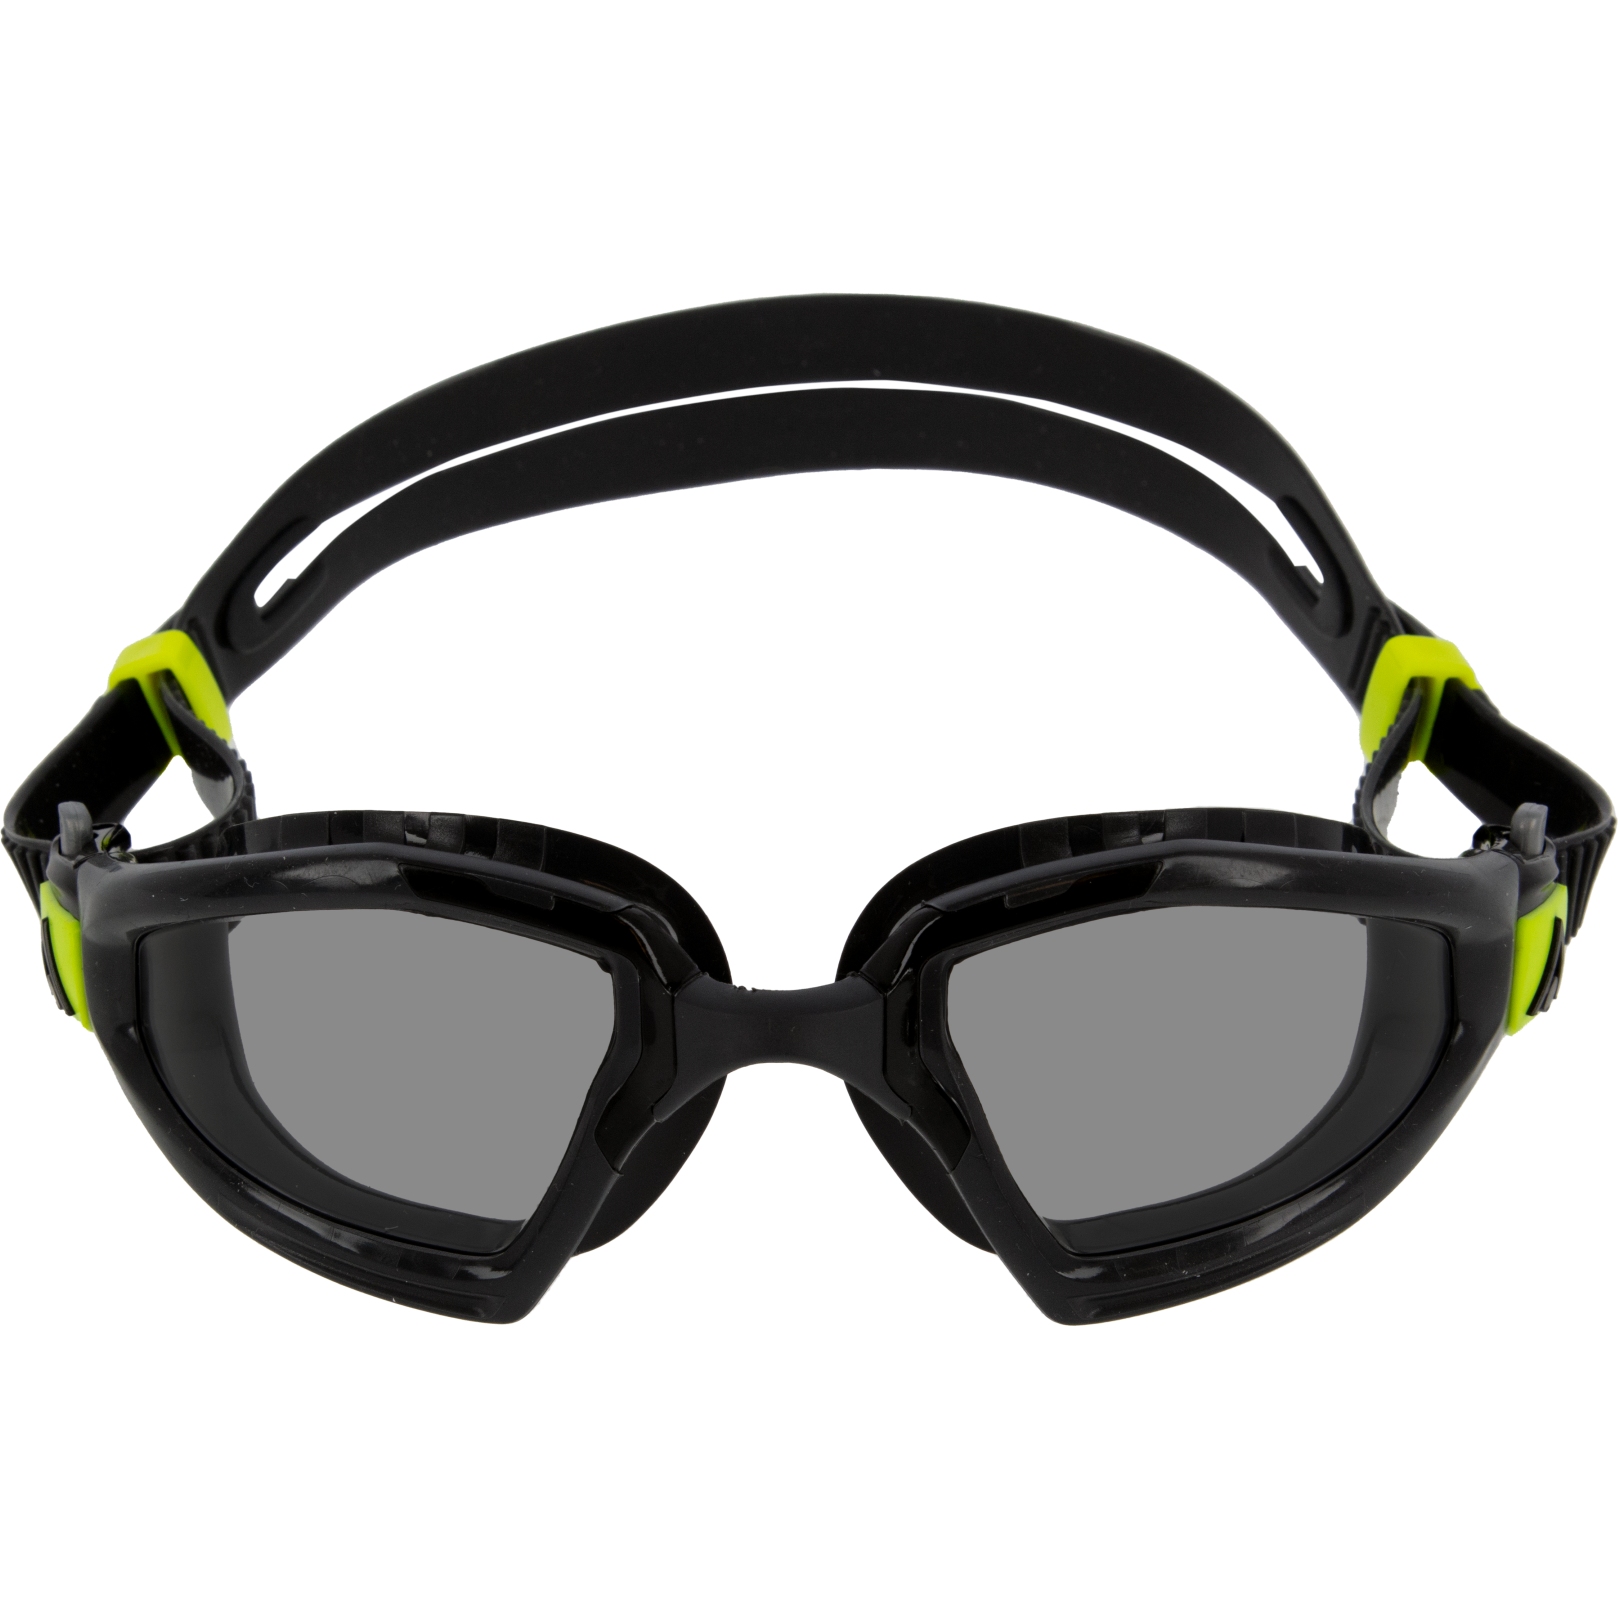 Picture of AQUASPHERE Kayenne Pro Swim Goggles - Photochromatic - Black/Bright Yellow